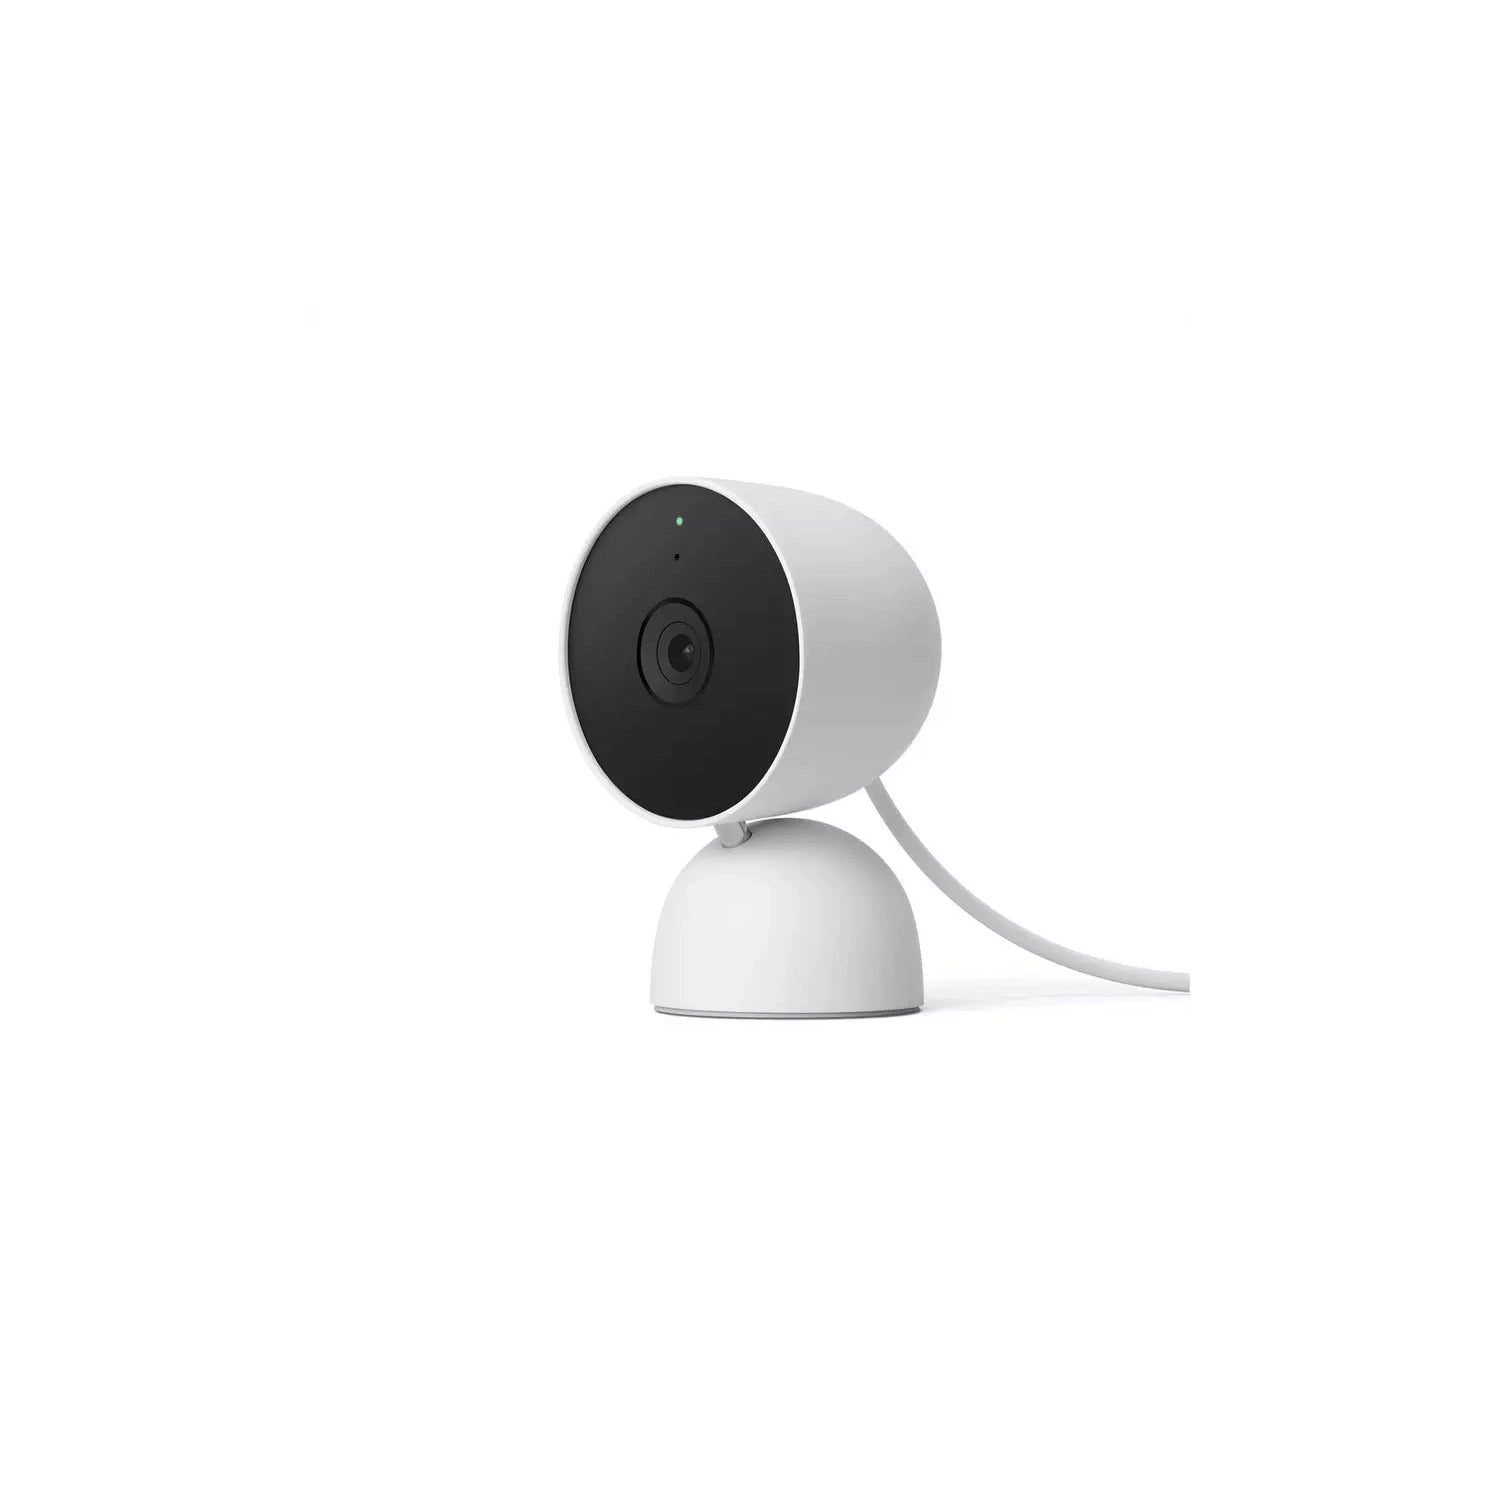 Google Nest Cam Indoor Security Camera Full HD 1080p - White - Refurbished Good